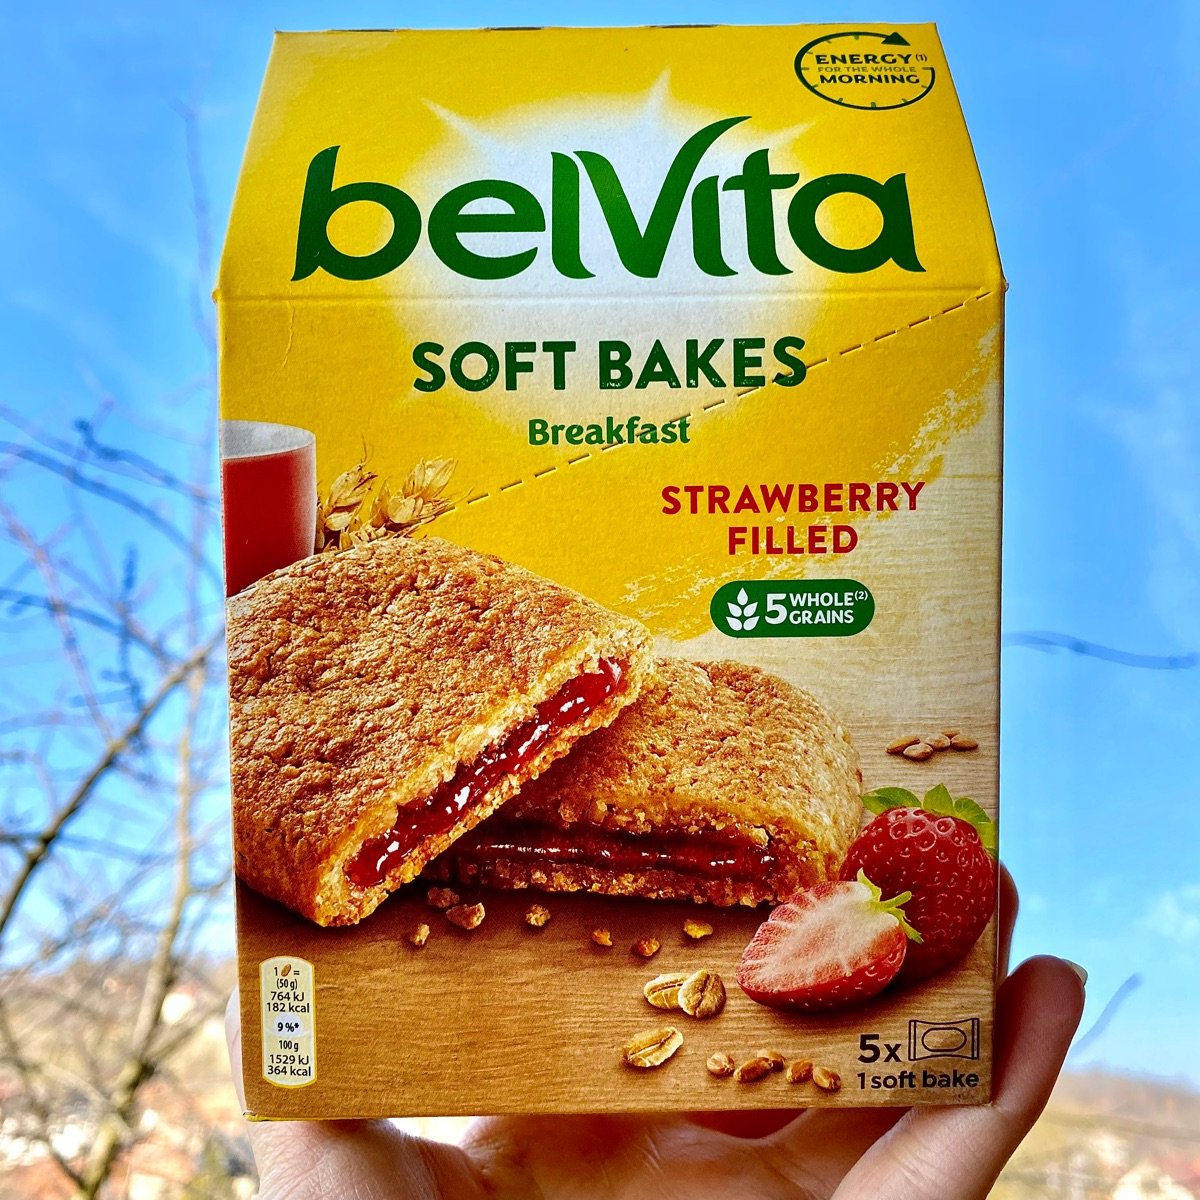 belVita Belvita Breakfast Soft Bakes Strawberry Filled Reviews